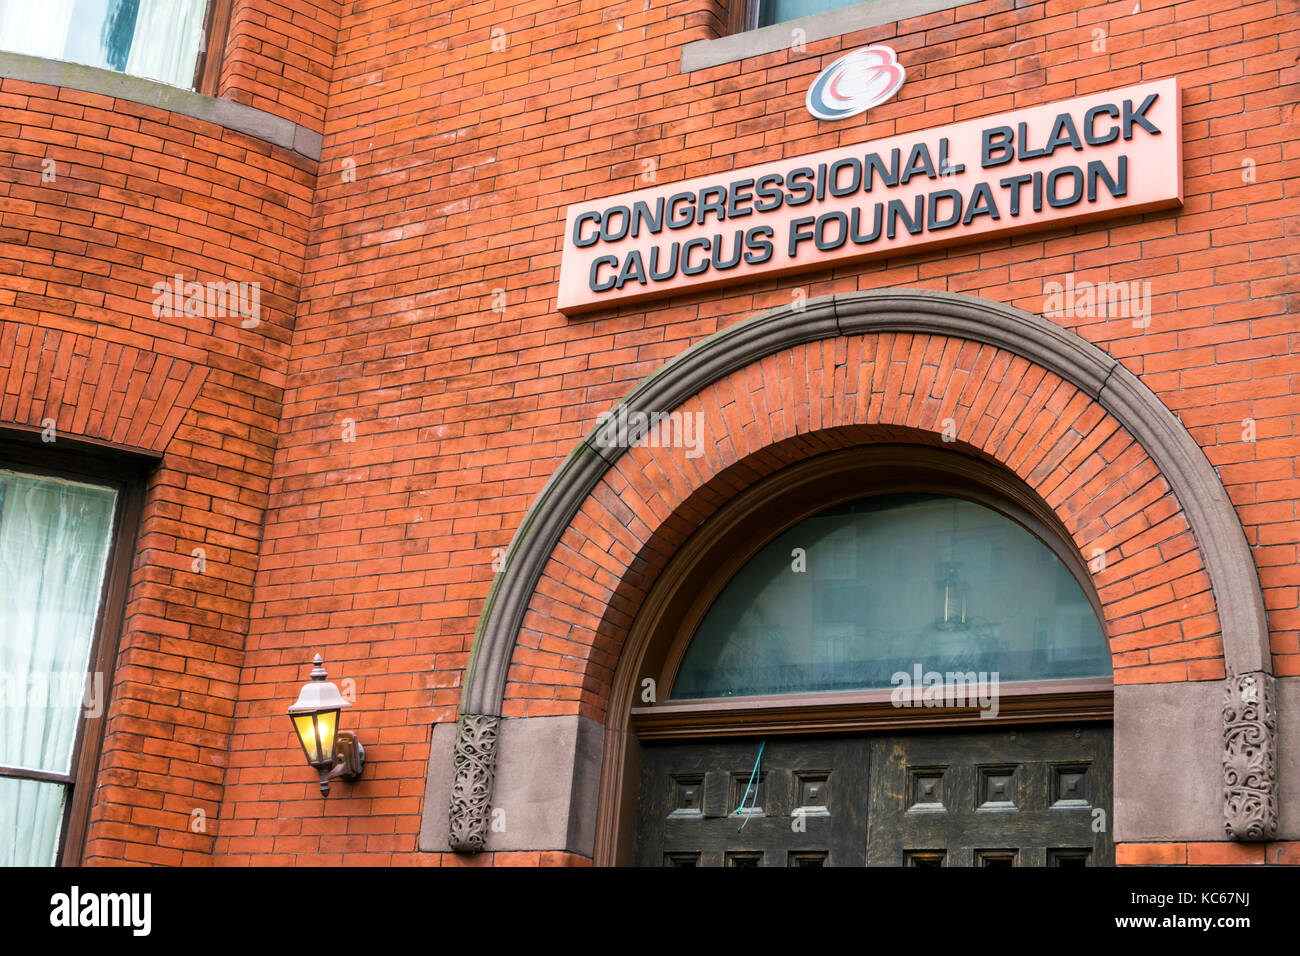 Washington DC, Massachusetts Avenue, Congressional Black Caucus Foundation, außen, Schild, DC170527126 Stockfoto